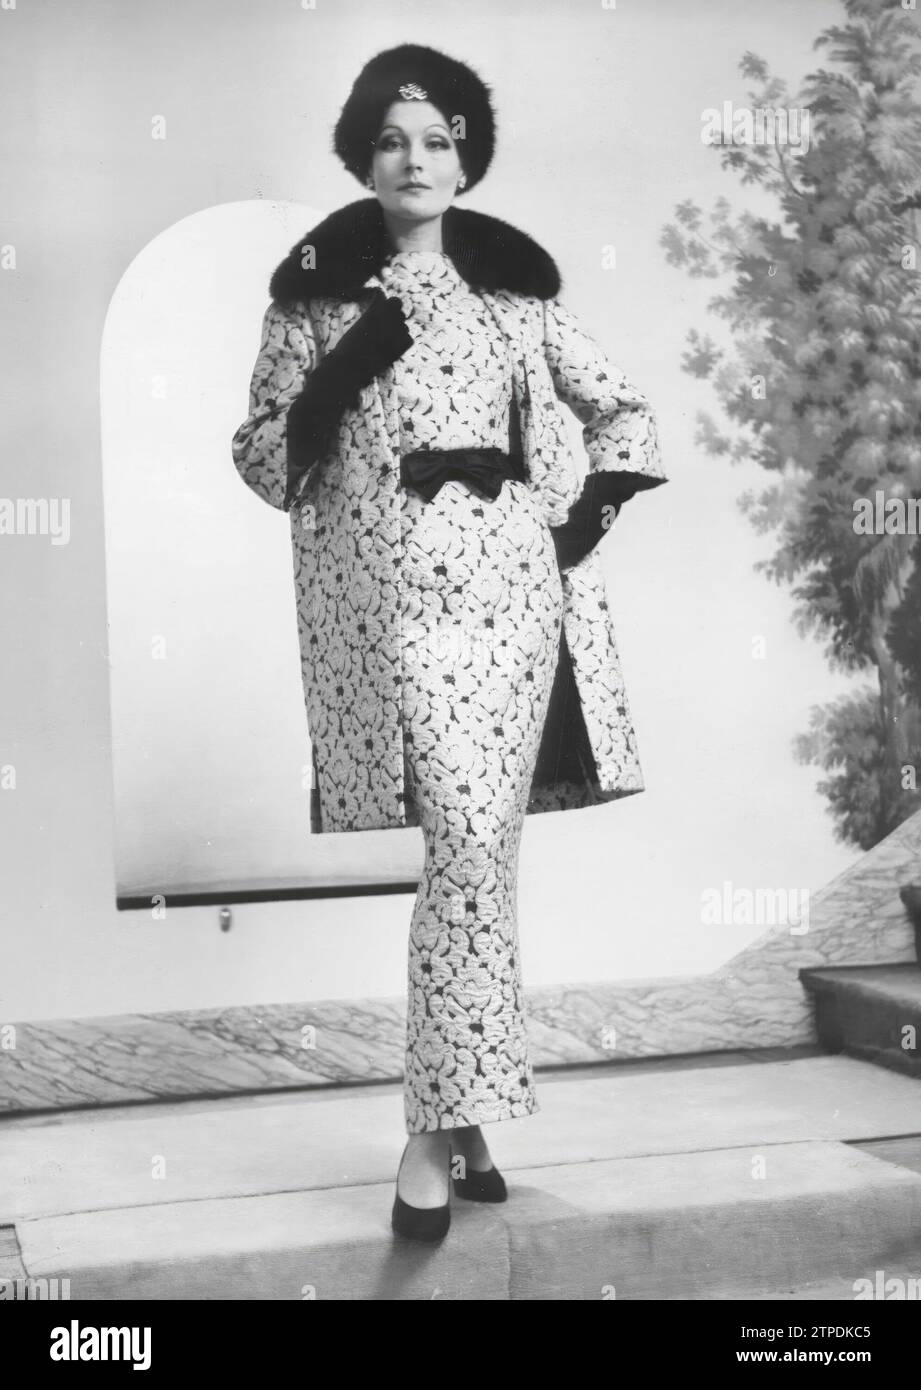 In the Image, coat from 1959. Pierre Balmain model. Credit: Album / Archivo ABC / Torremocha Stock Photo